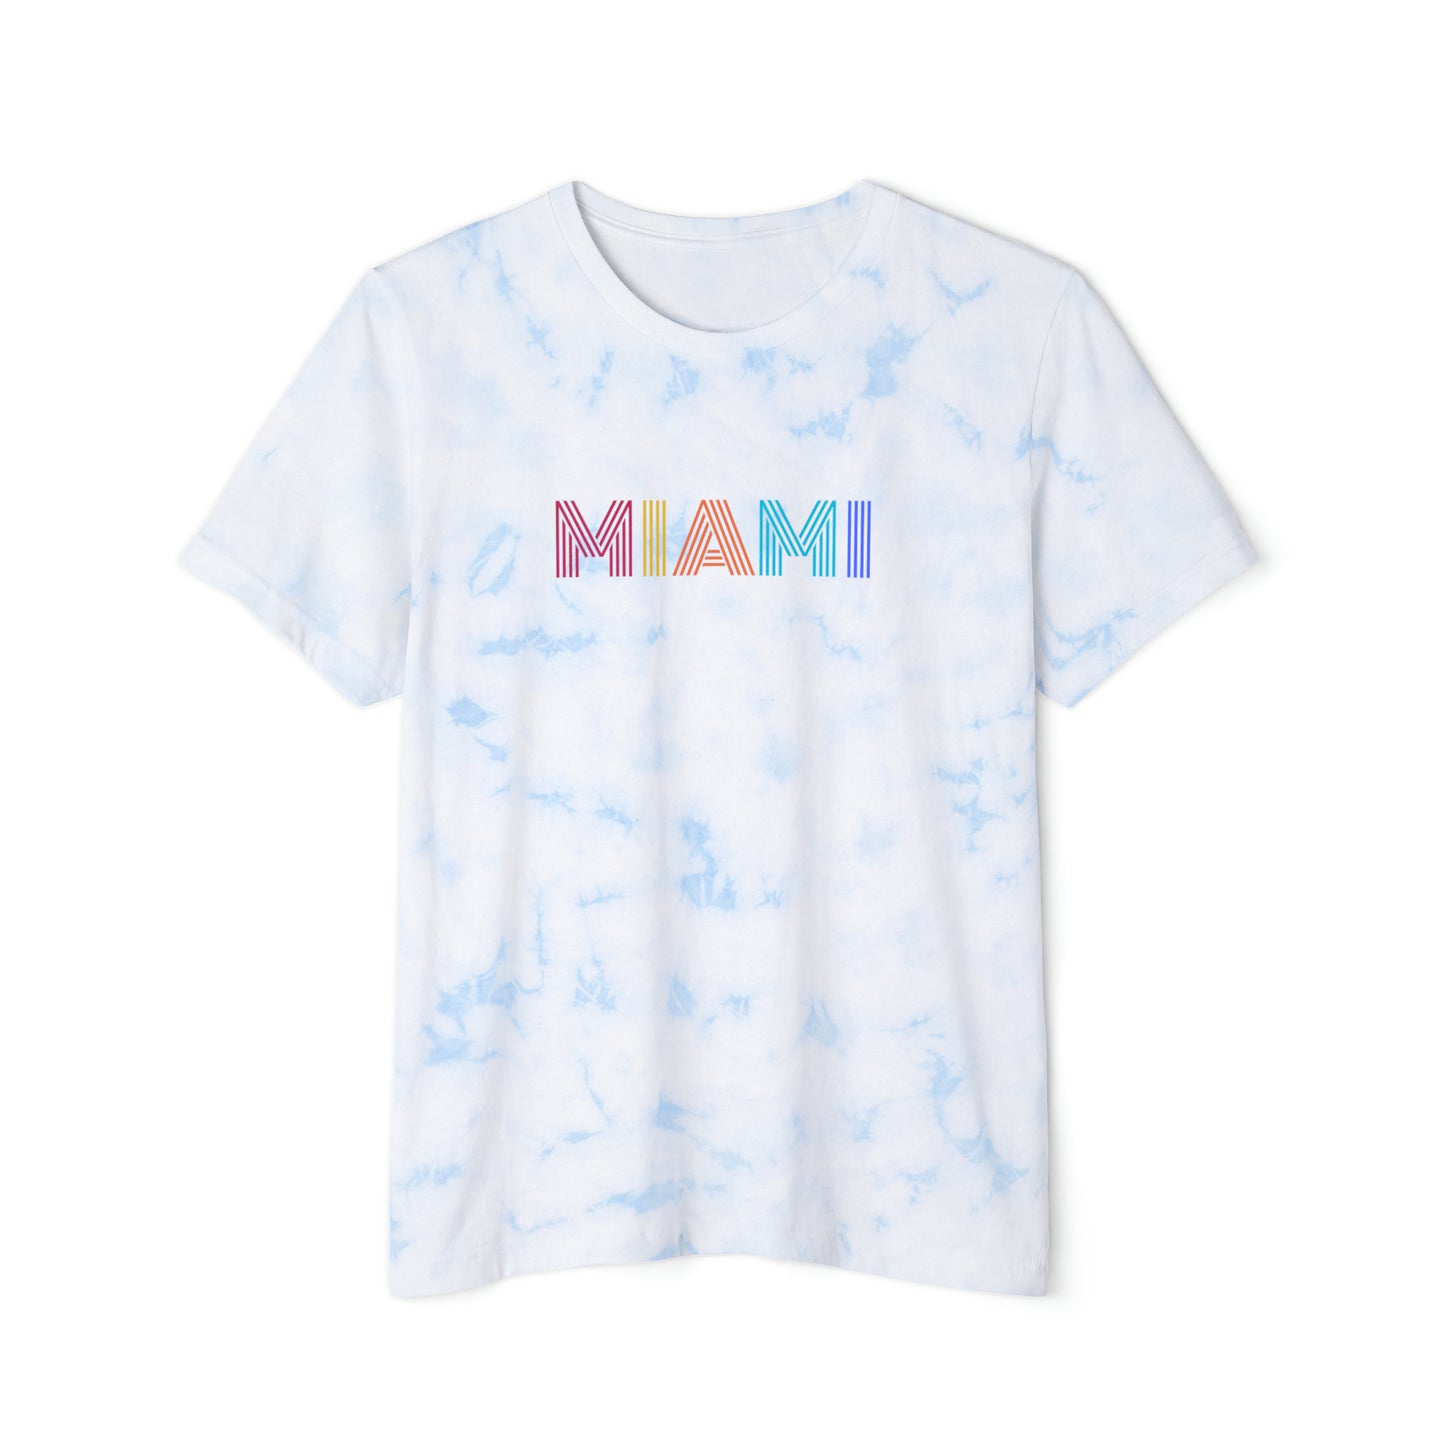 MIAMI Unisex FWD Fashion Tie-Dyed T-Shirt